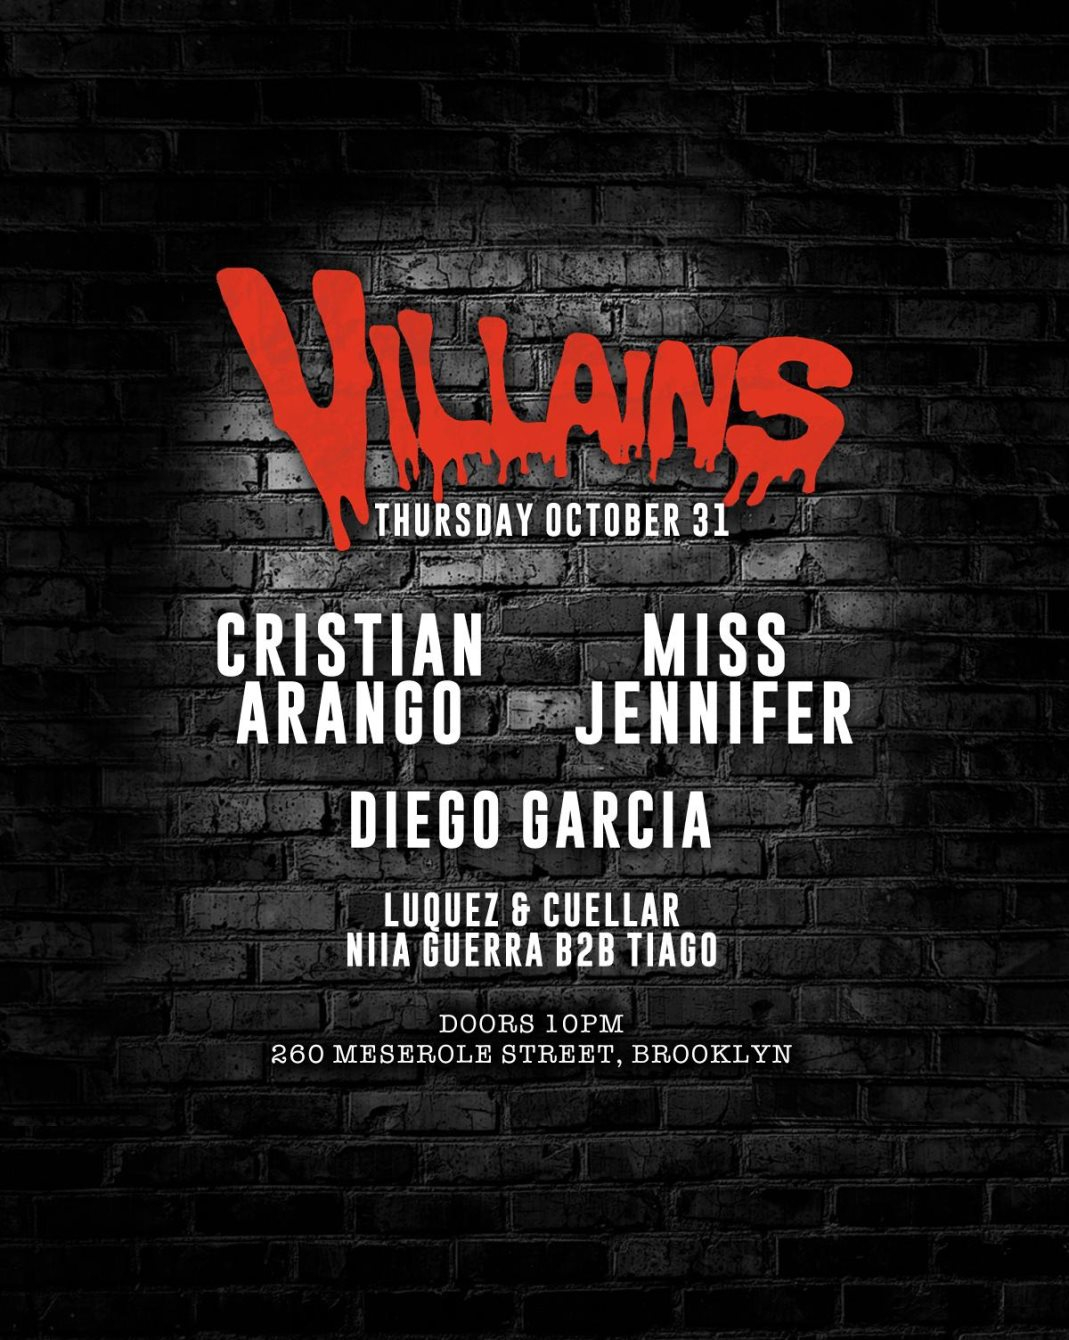 Villains with Cristian Arango, Miss Jennifer & More - Flyer back